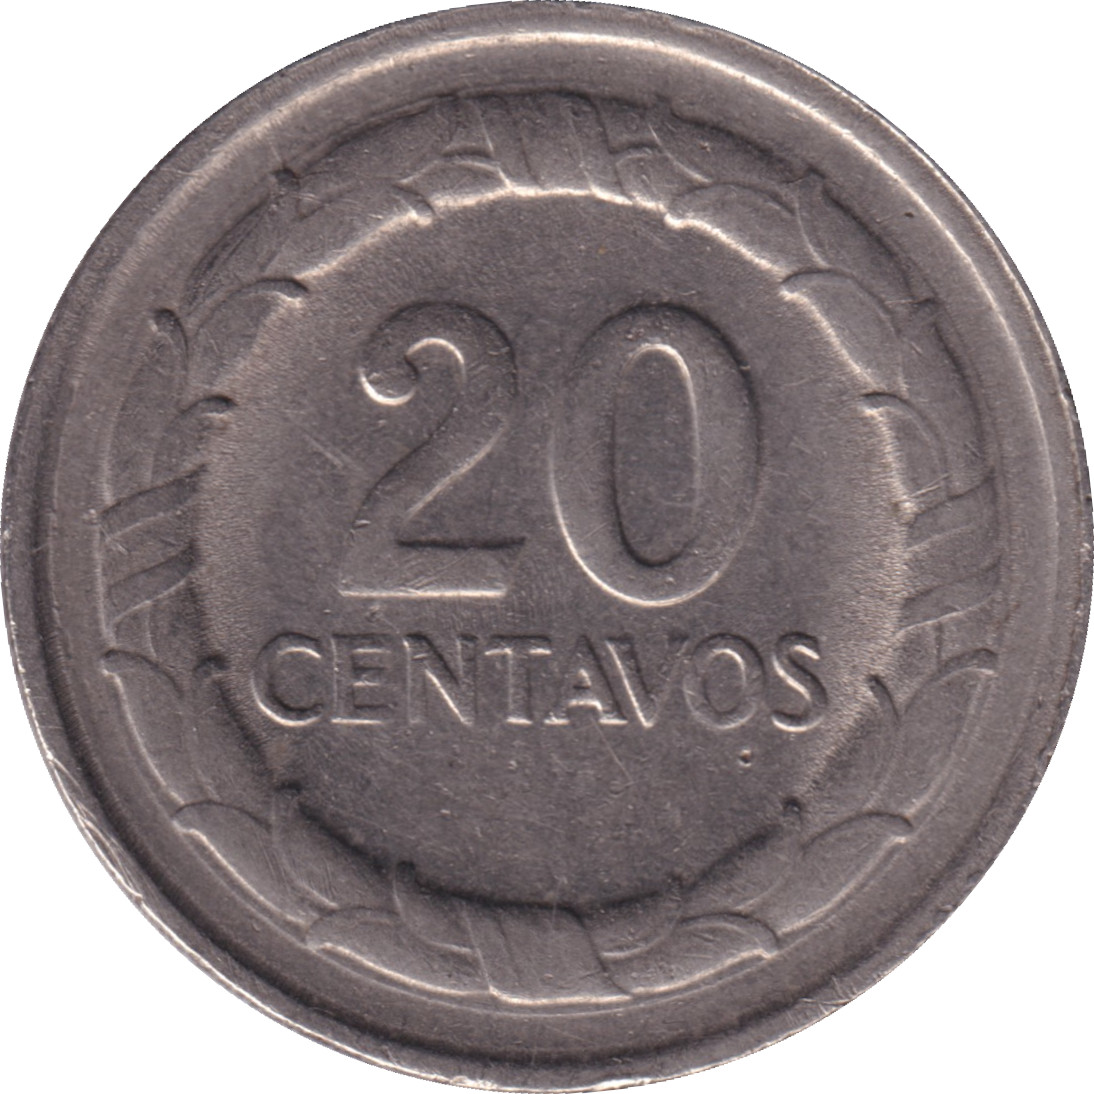 20 centavos - Santander - Grande tête